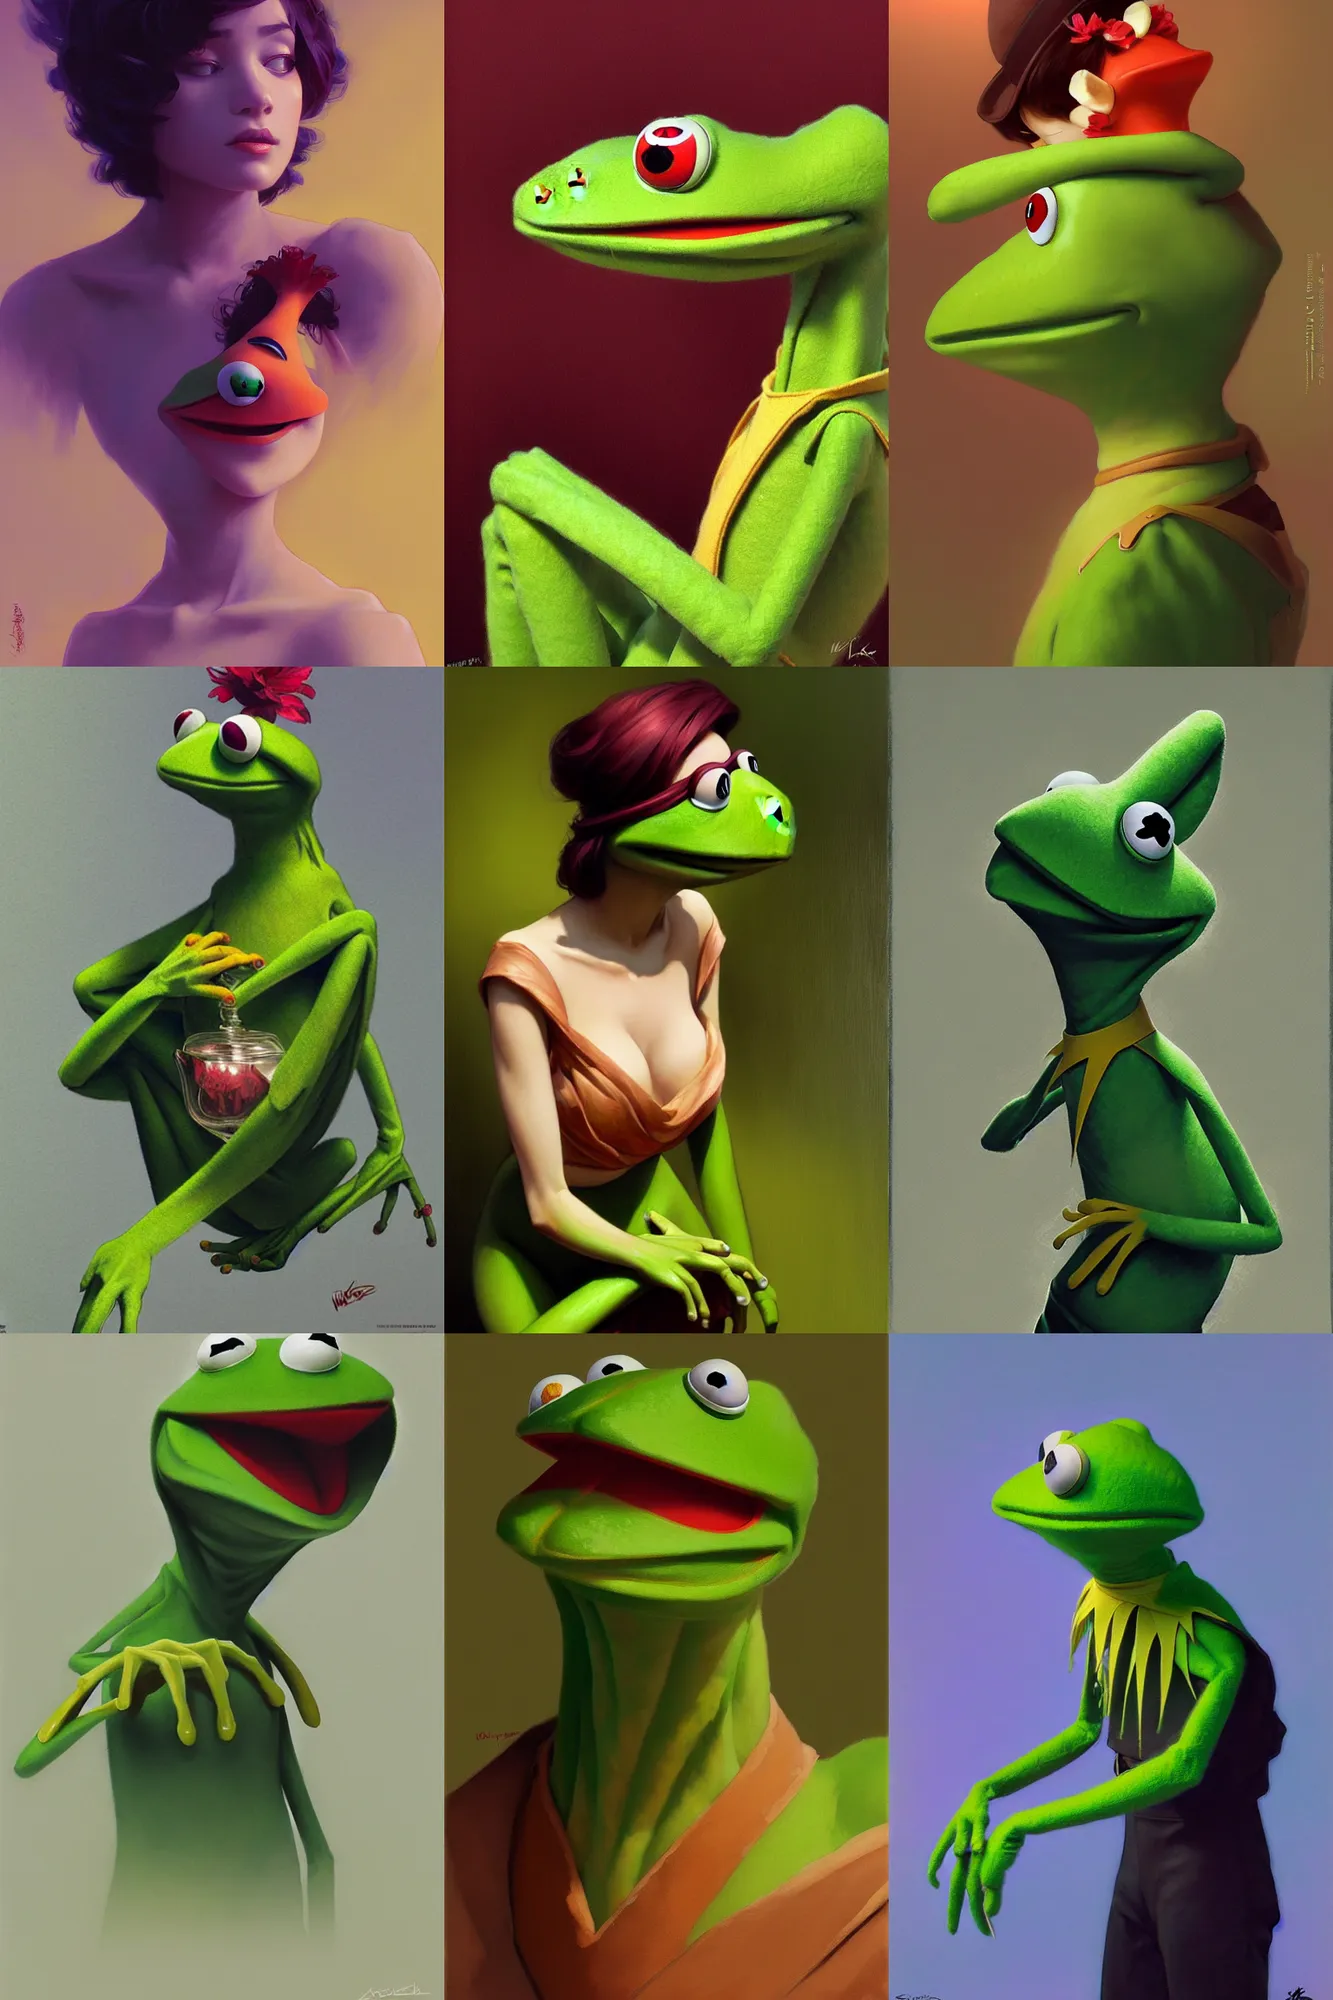 Prompt: Kermit the Frog, elegant, vibrant, smooth, by ilya kuvshinov, craig mullins, edgar maxence, alphonse mucha, artgerm, sakimichan